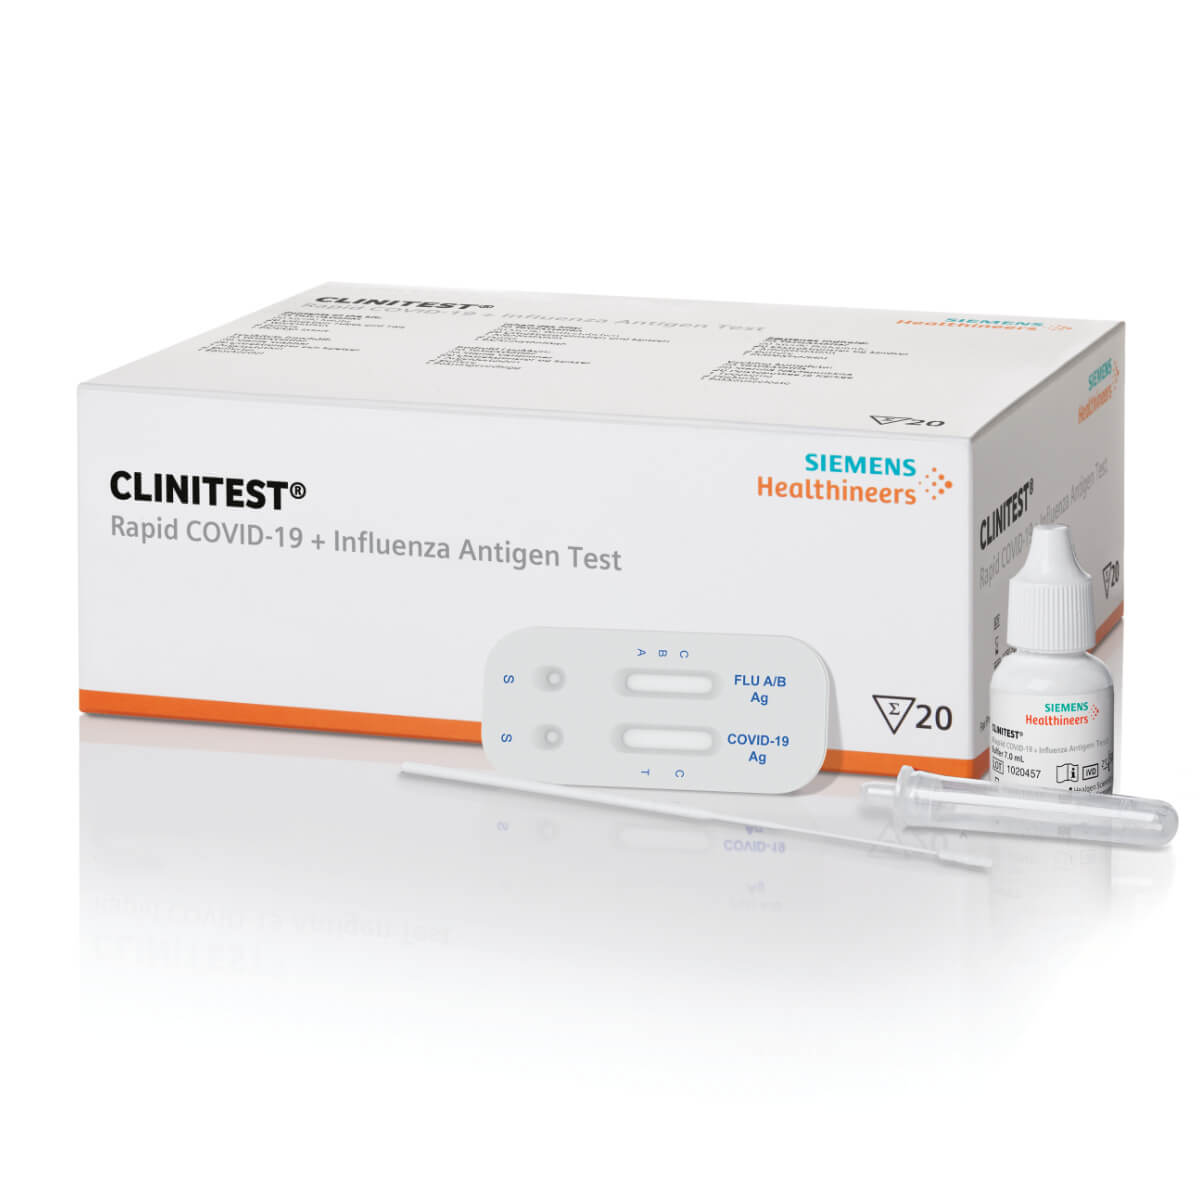 Siemens-clinitest-rapid-covid-influenza-antigen-pack-2